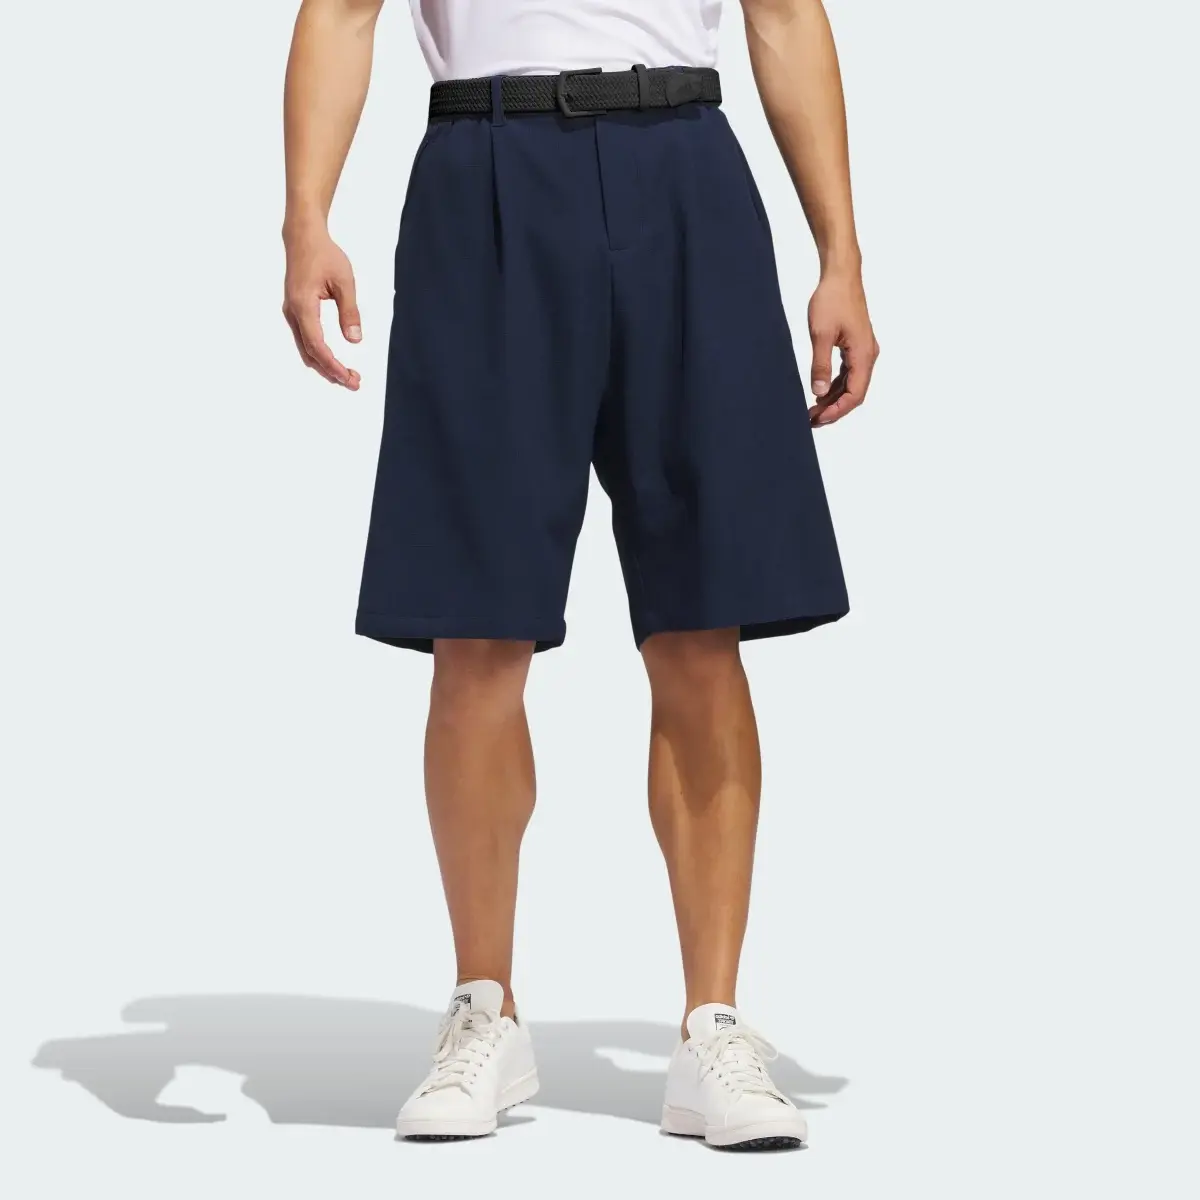 Adidas Malbon Shorts. 1